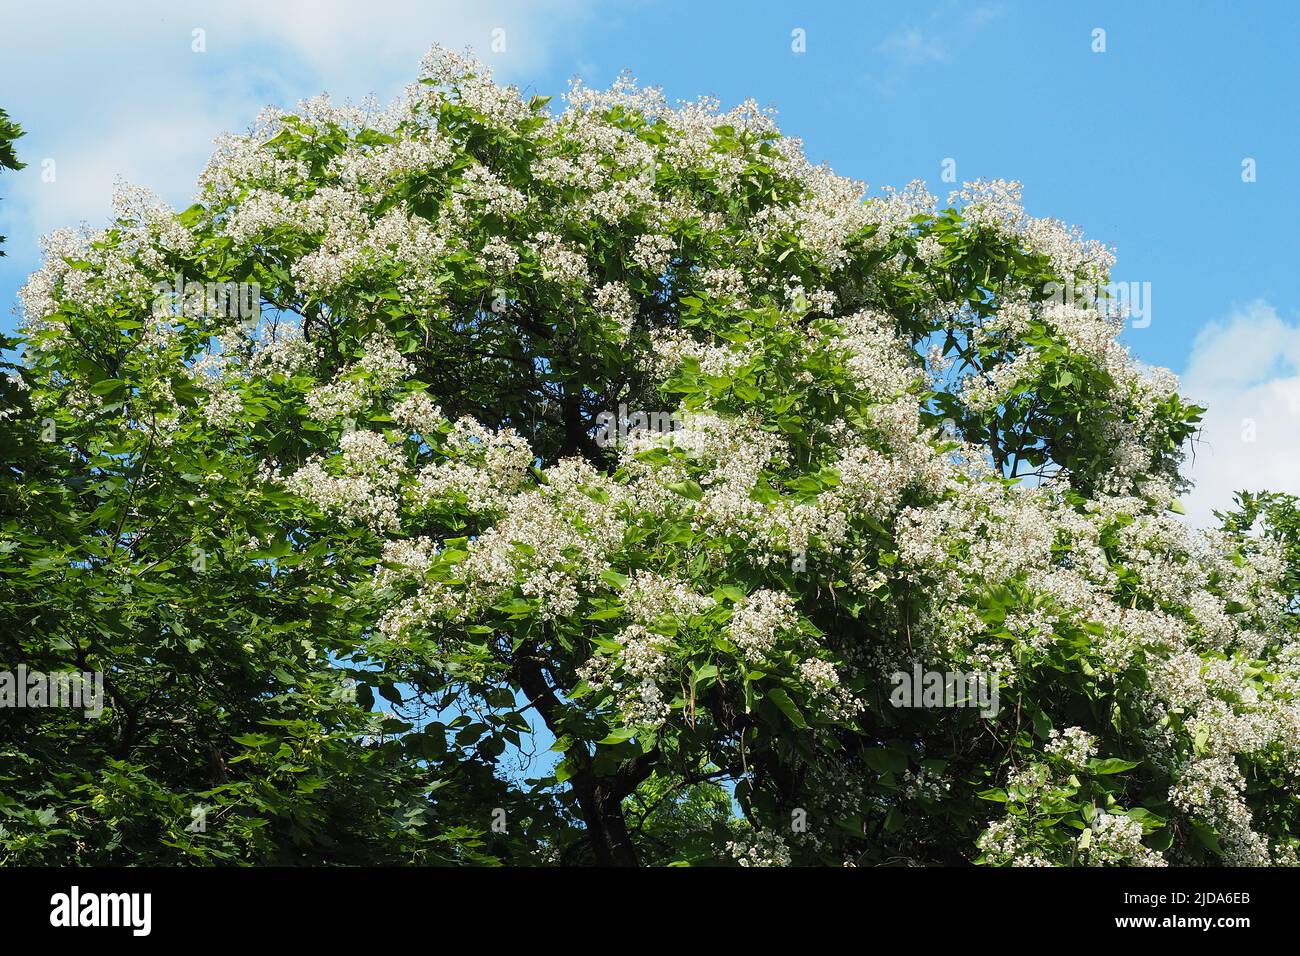 southern catalpa, cigartree, and Indian-bean-tree, Gewöhnlicher Trompetenbaum, Catalpa bignonioides, szívlevelű szivarfa, Budapest, Hungary, Europe Stock Photo